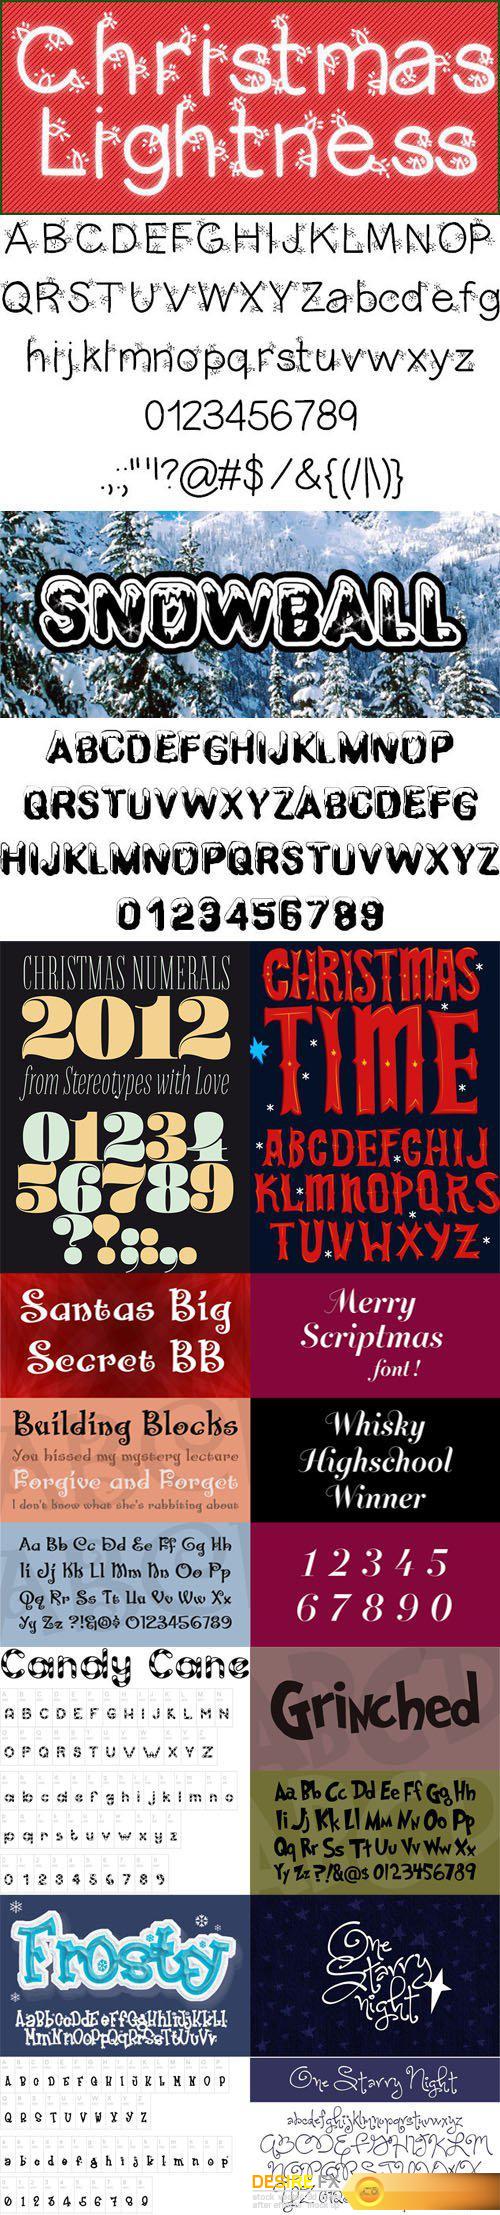 10 Christmas Fonts - 2017 Festive Holiday Fonts